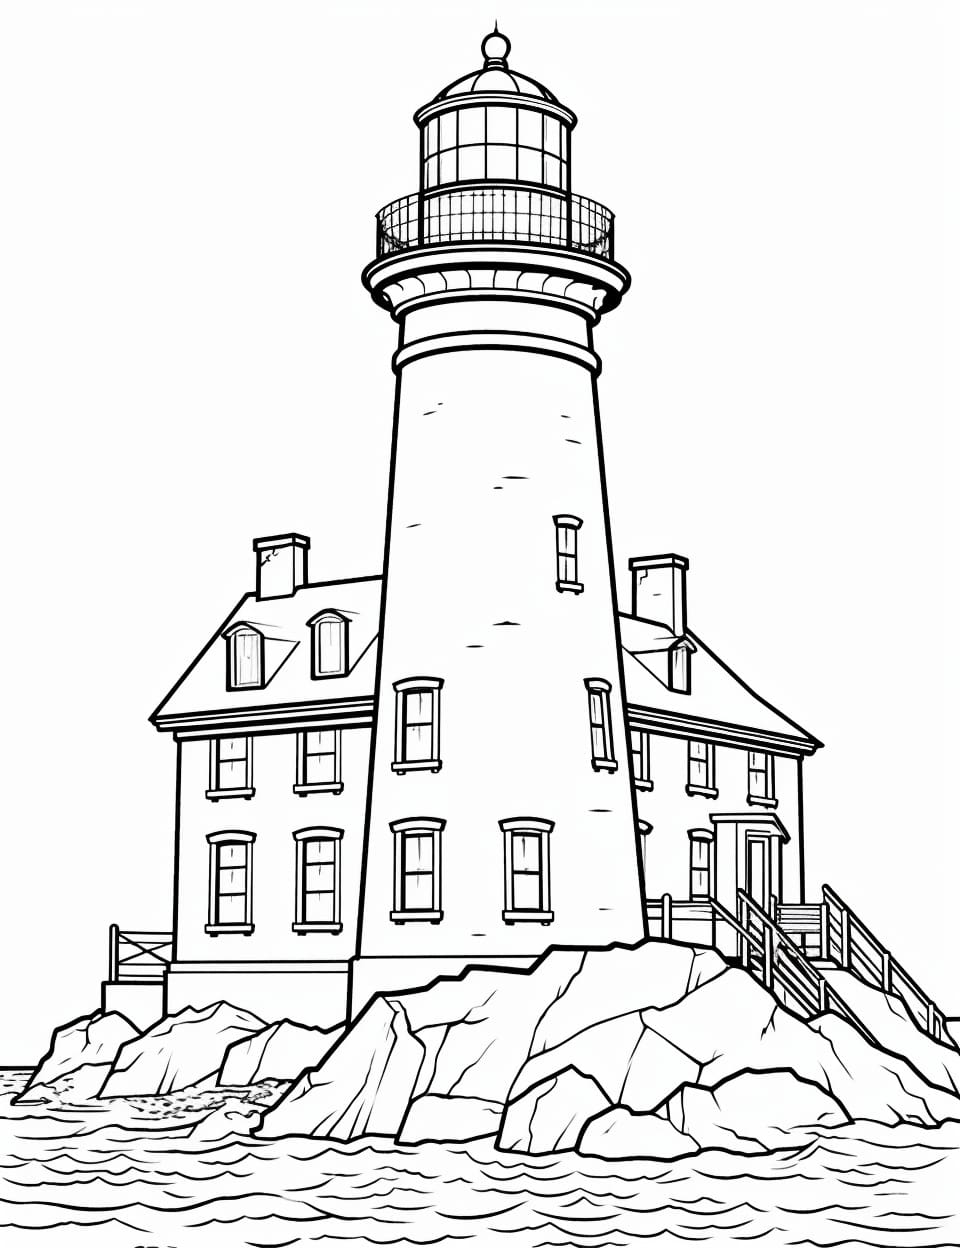 Lighthouse Coloring Sheet (Free to print) | Kokoprint.com